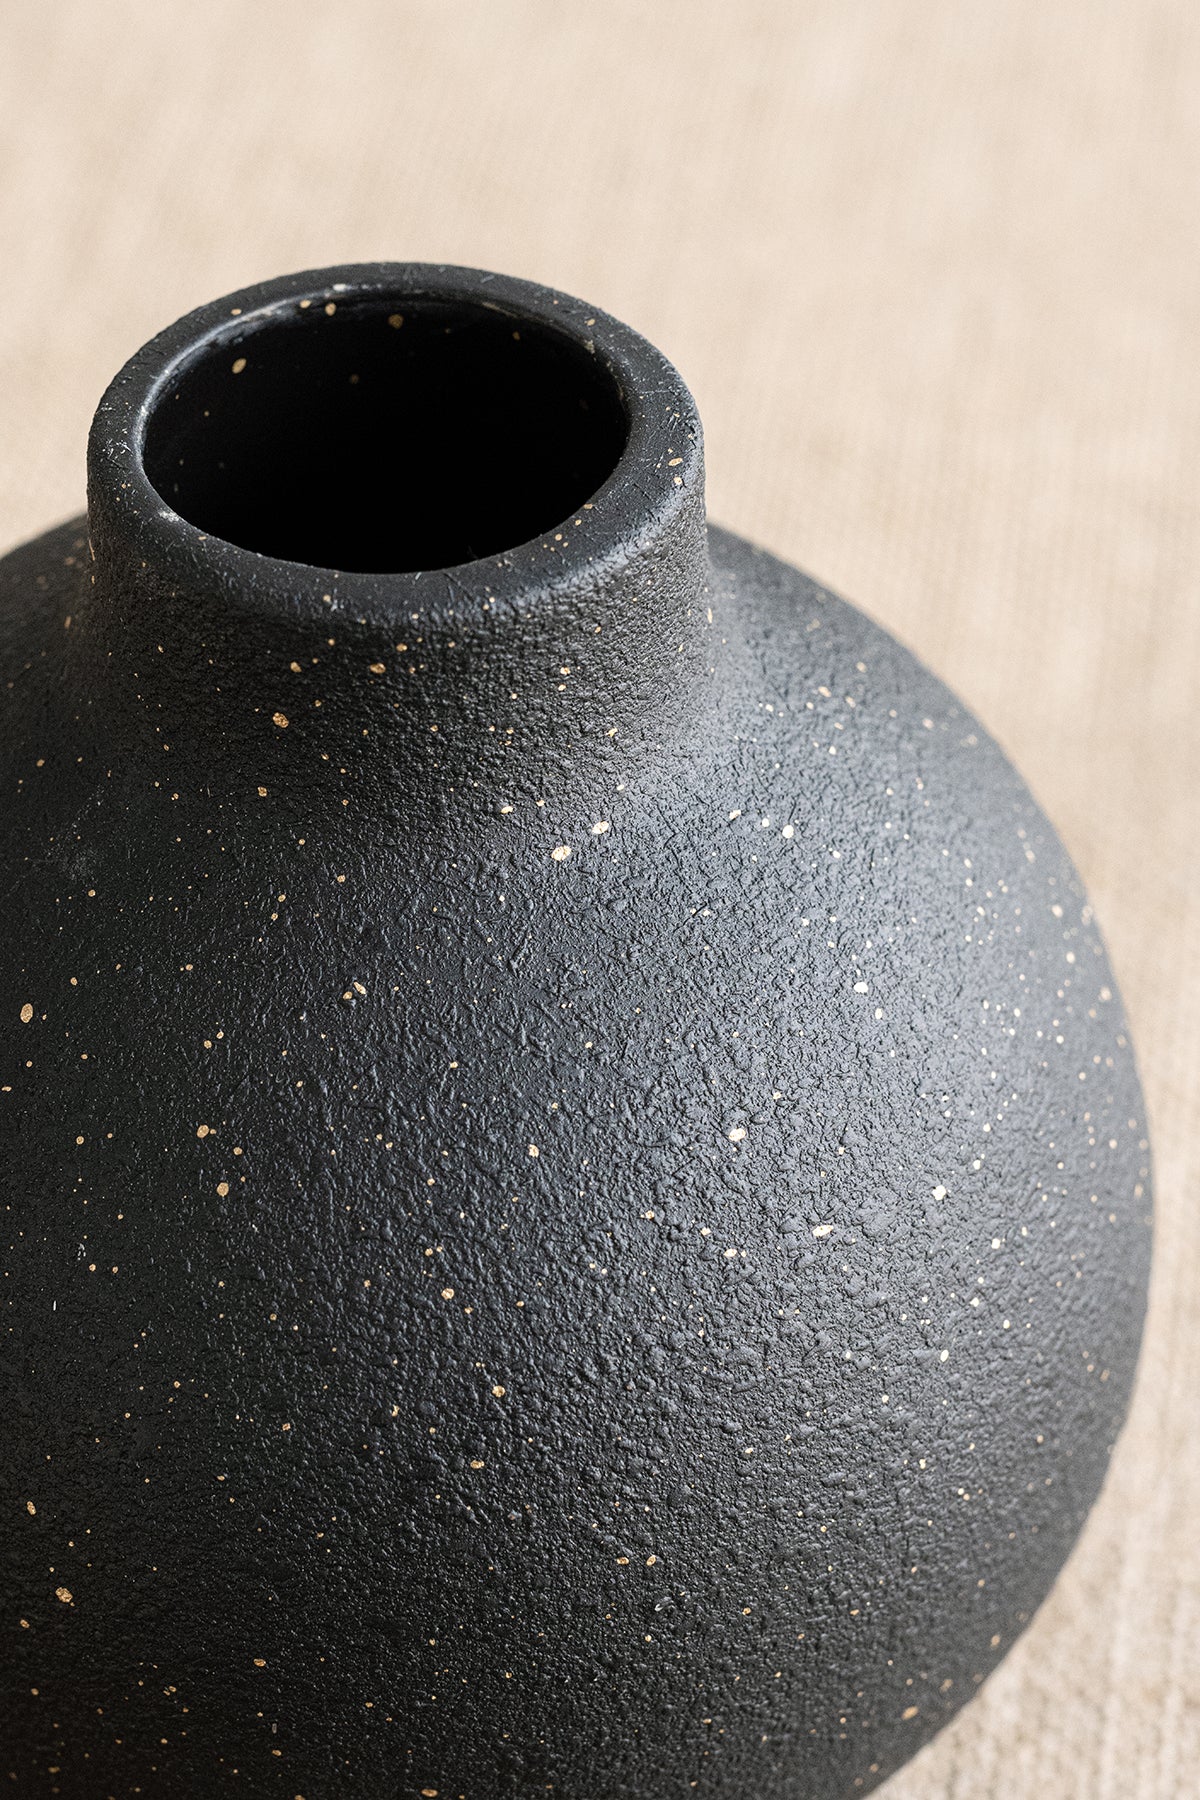 Spherical Ceramic Vase for Halloween in Black & Pumpkin Orange | CLEARANCE